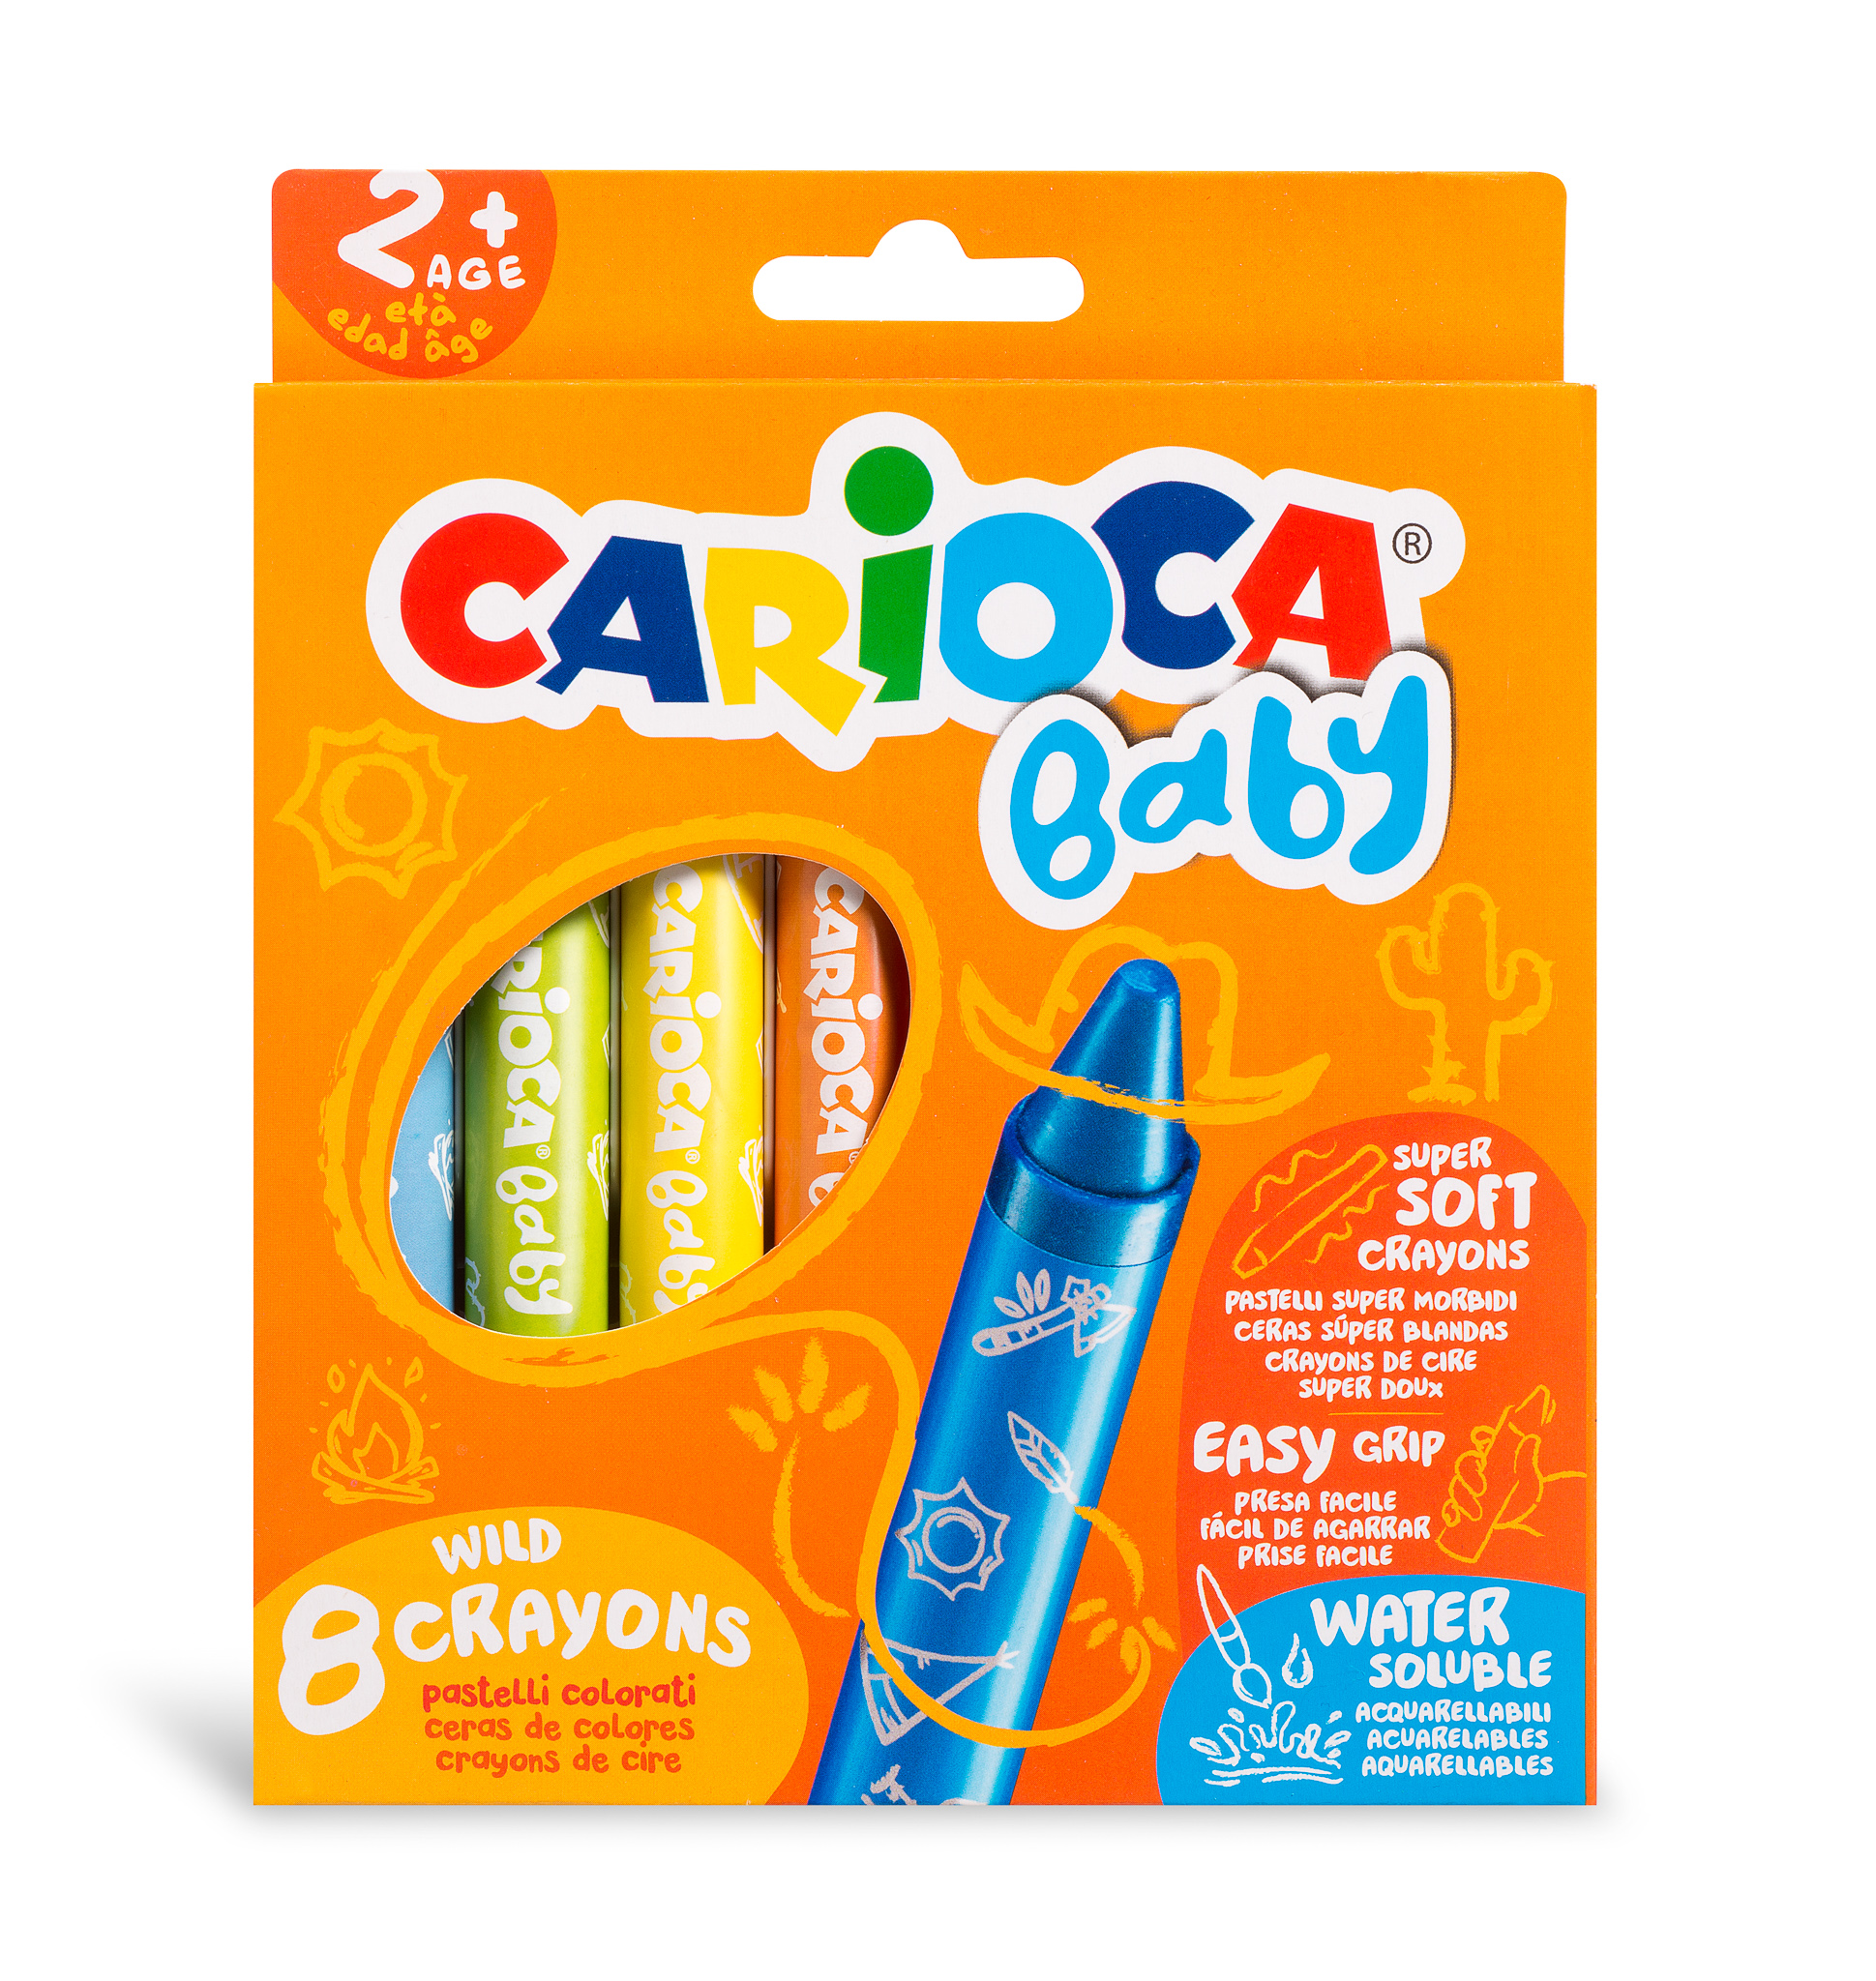 Carioca Baby Wild Crayons - Pack of 8